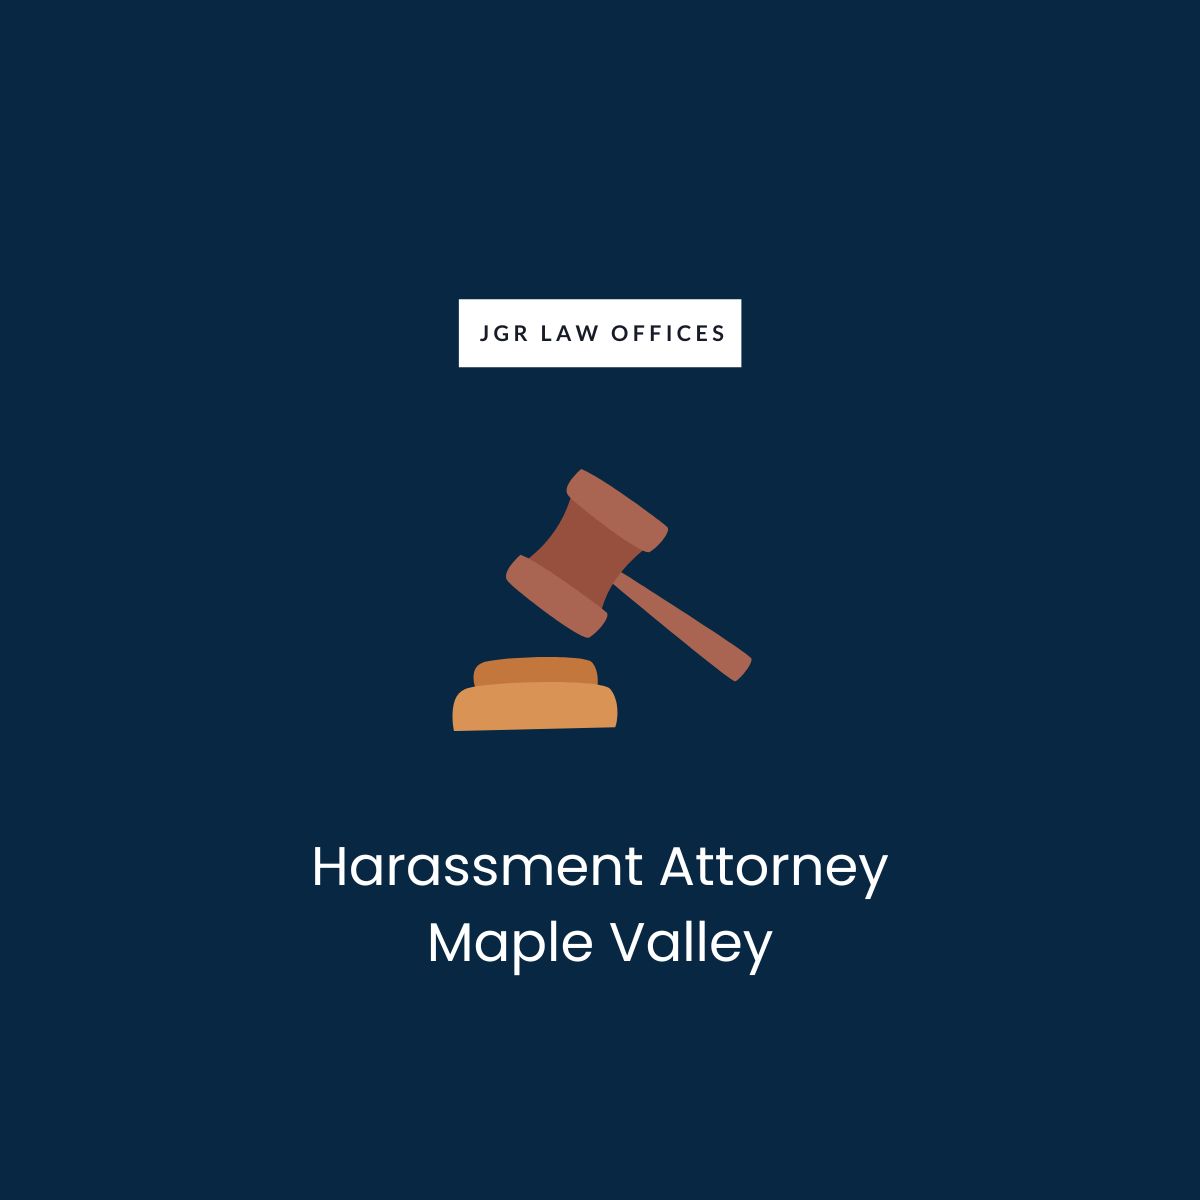 Harassment Lawyer Maple Valley Harassment Harassment